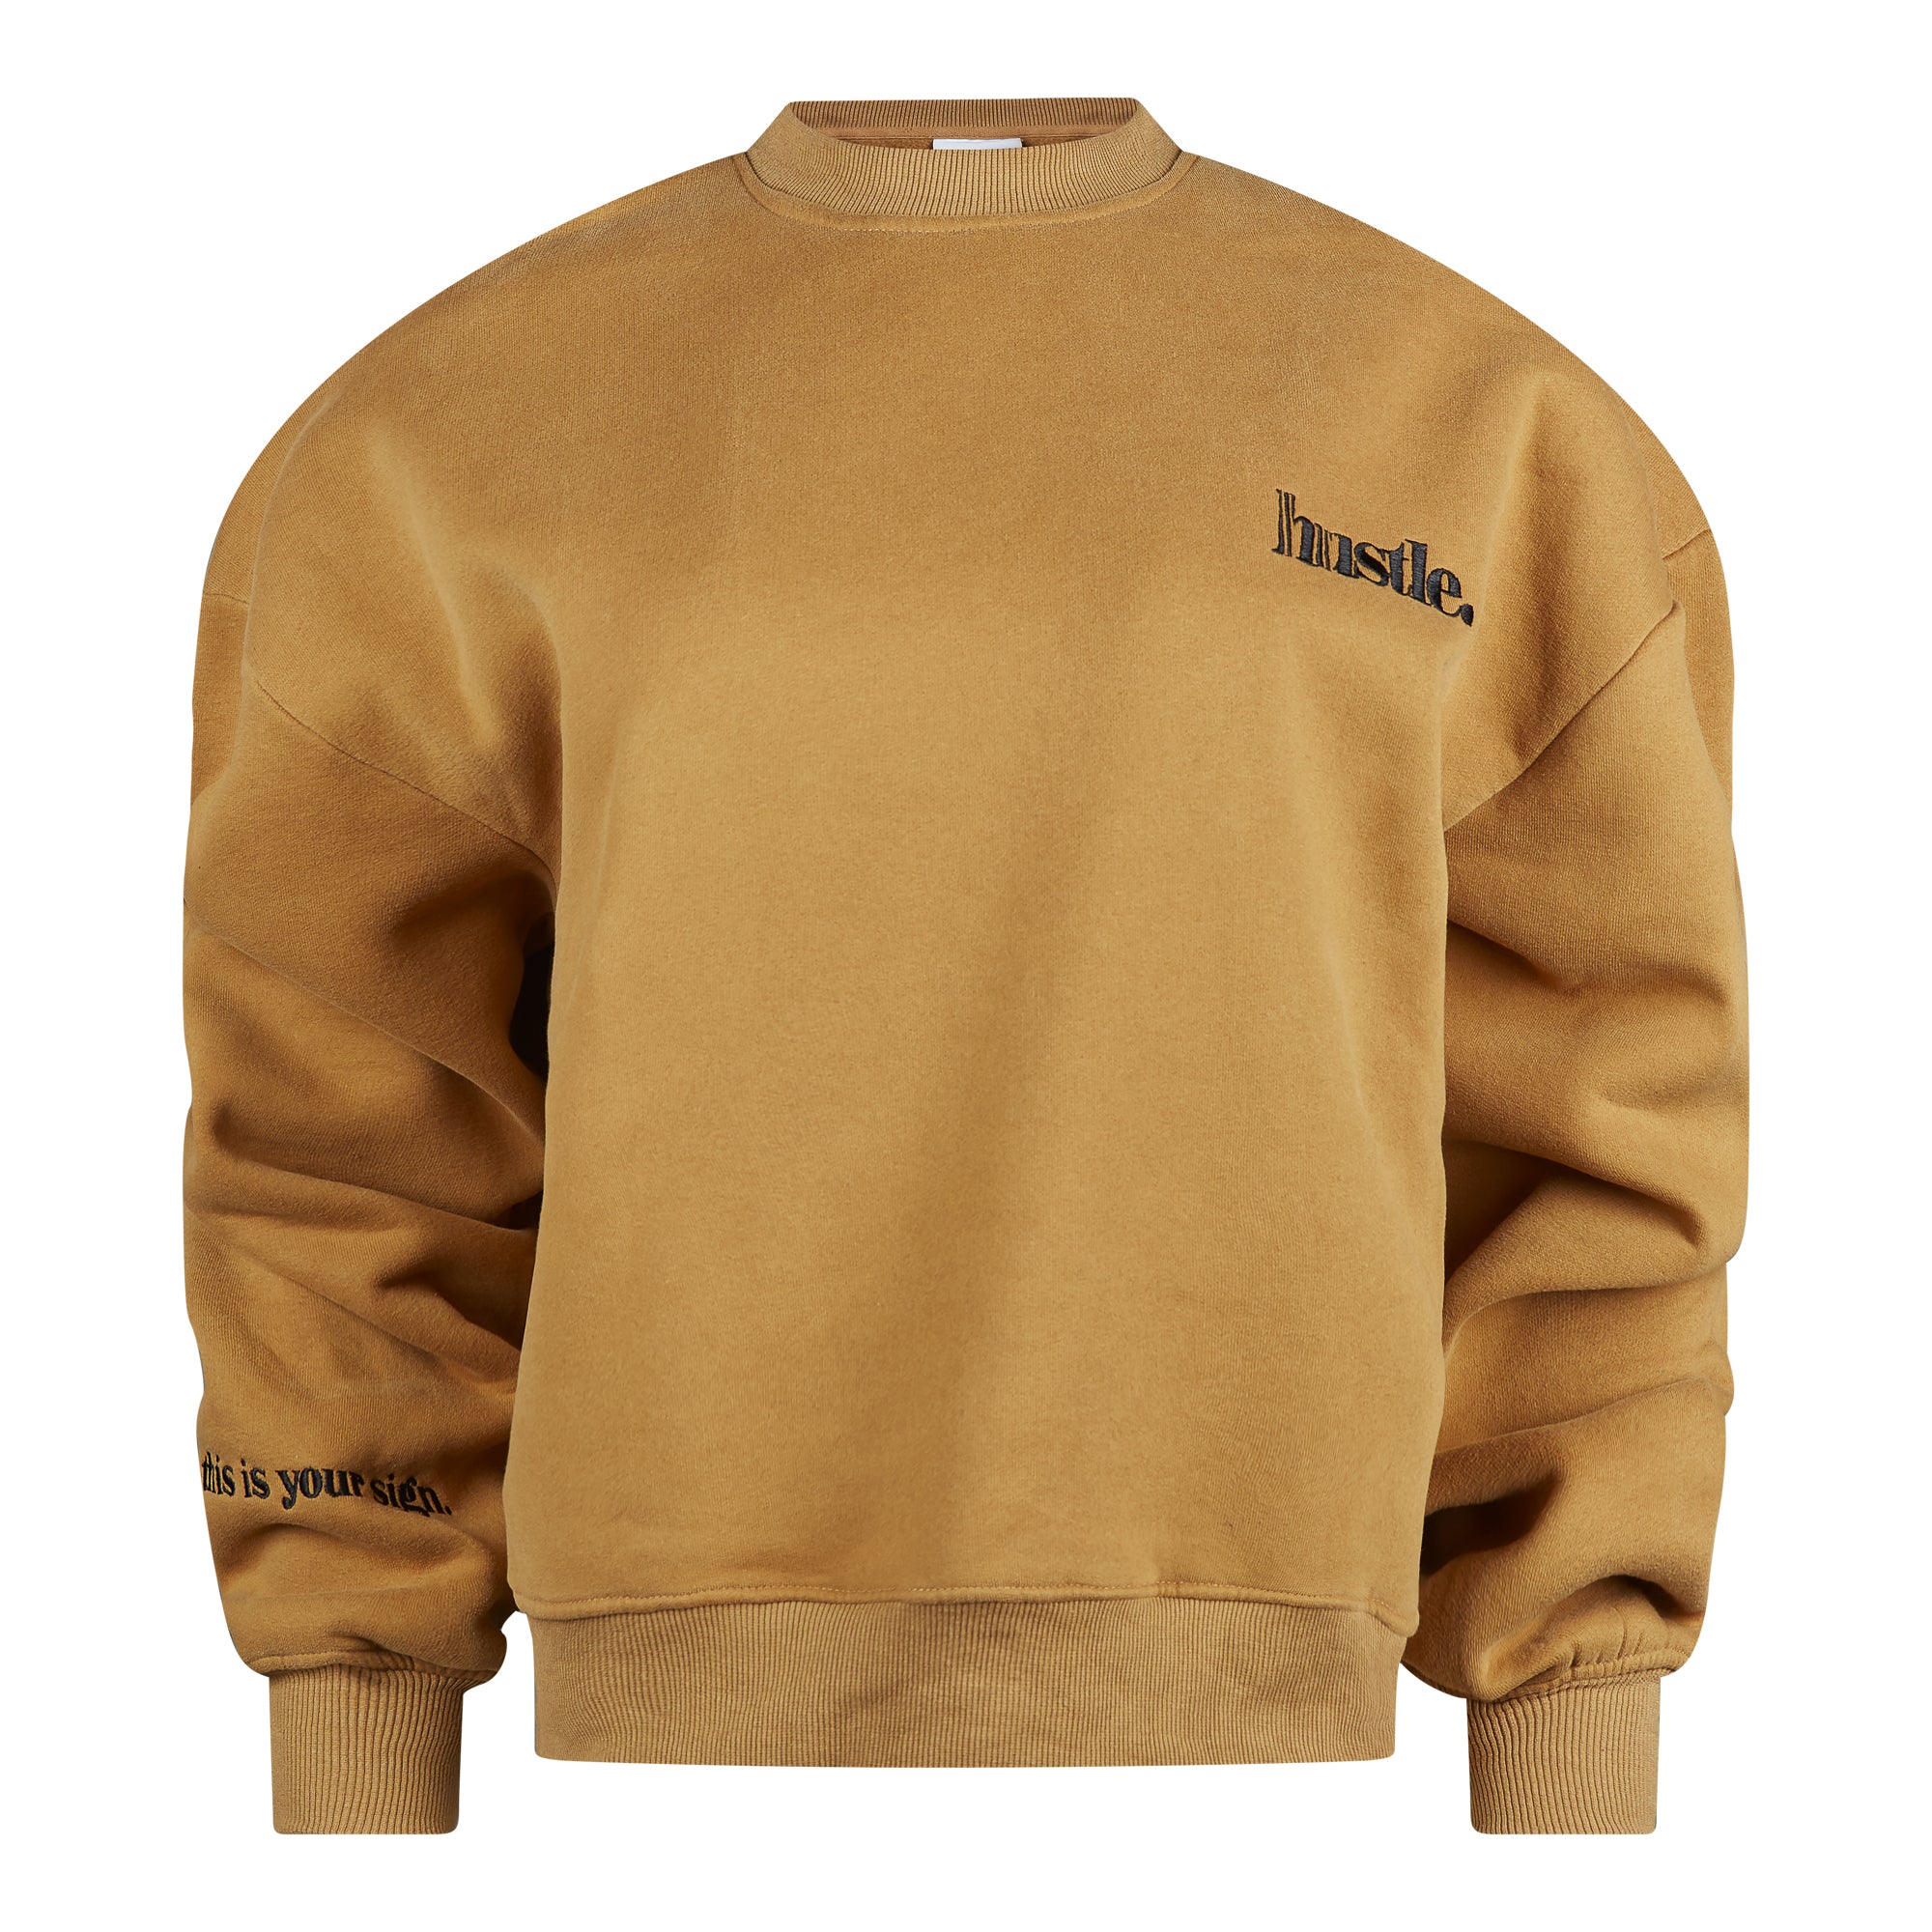 The Angel Number Sweatshirt | Camel